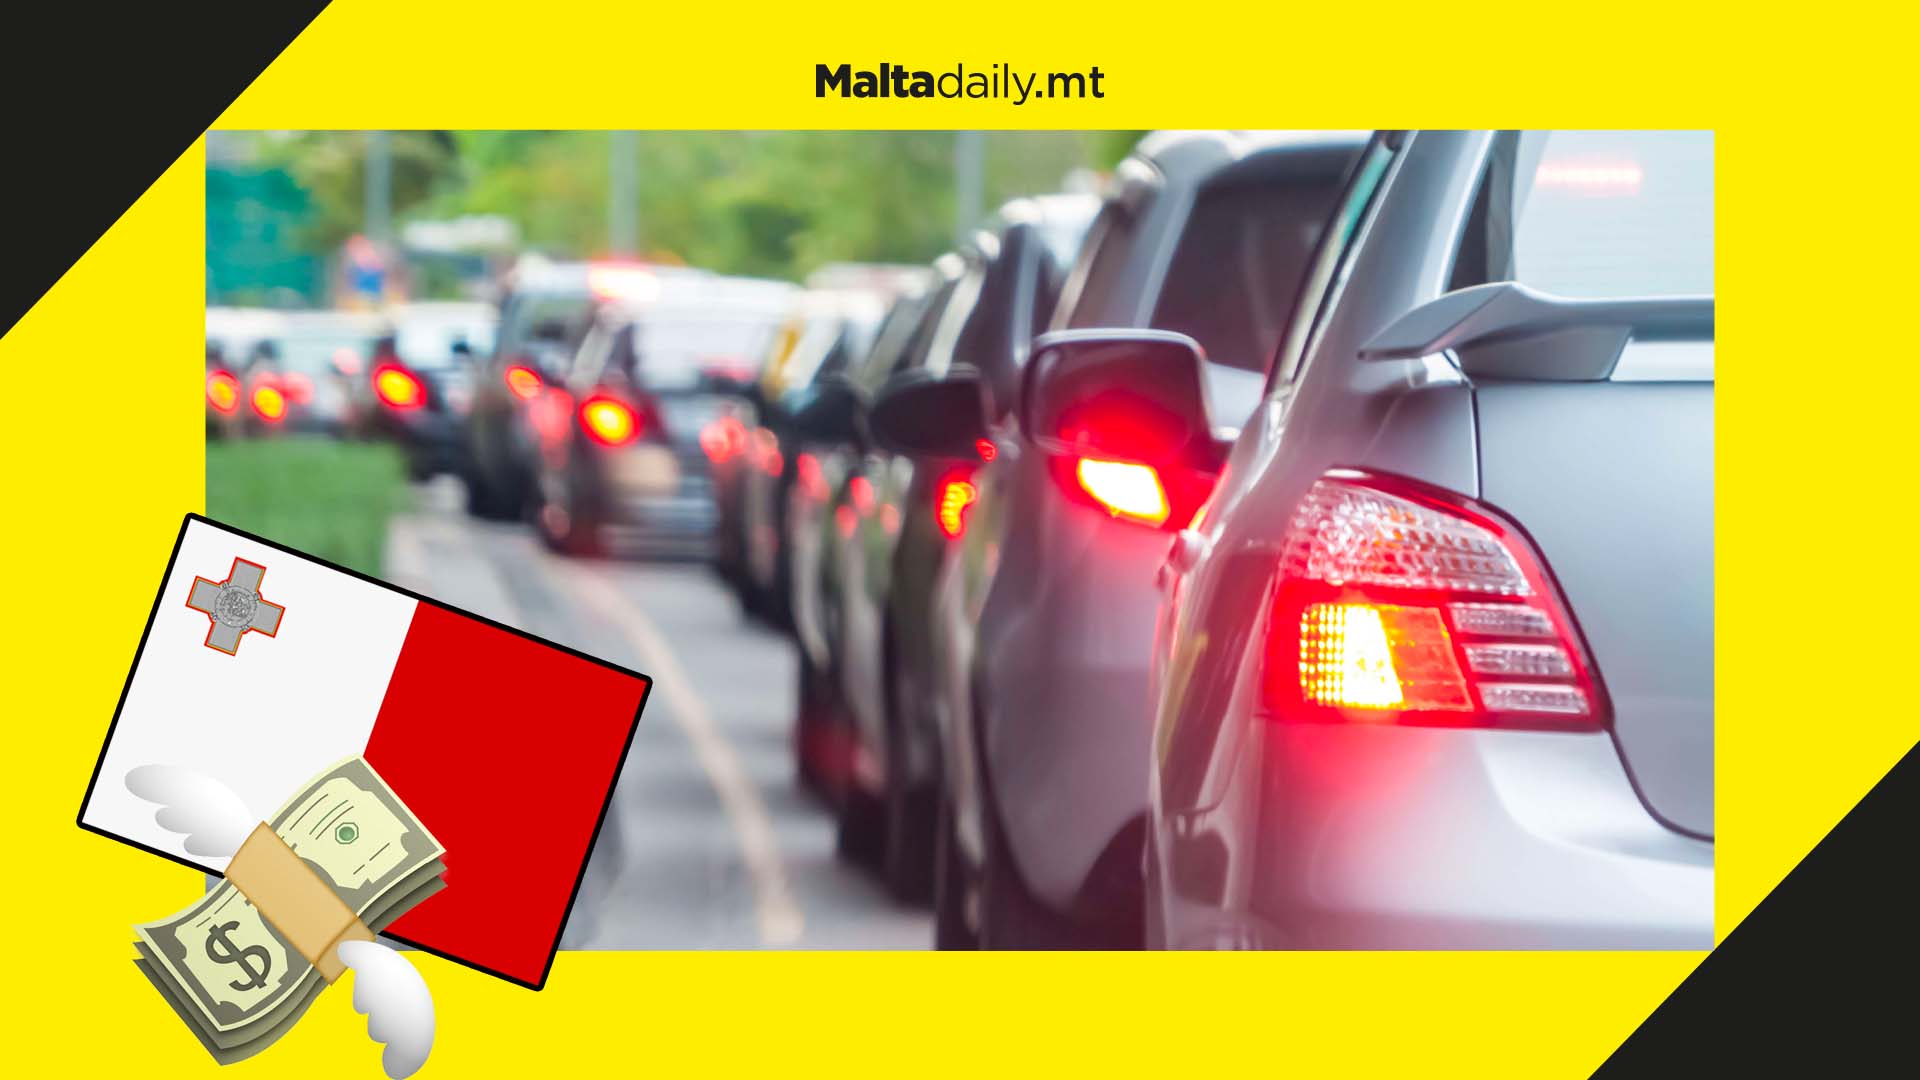 Traffic pollution and jams costing Malta €400 million per year